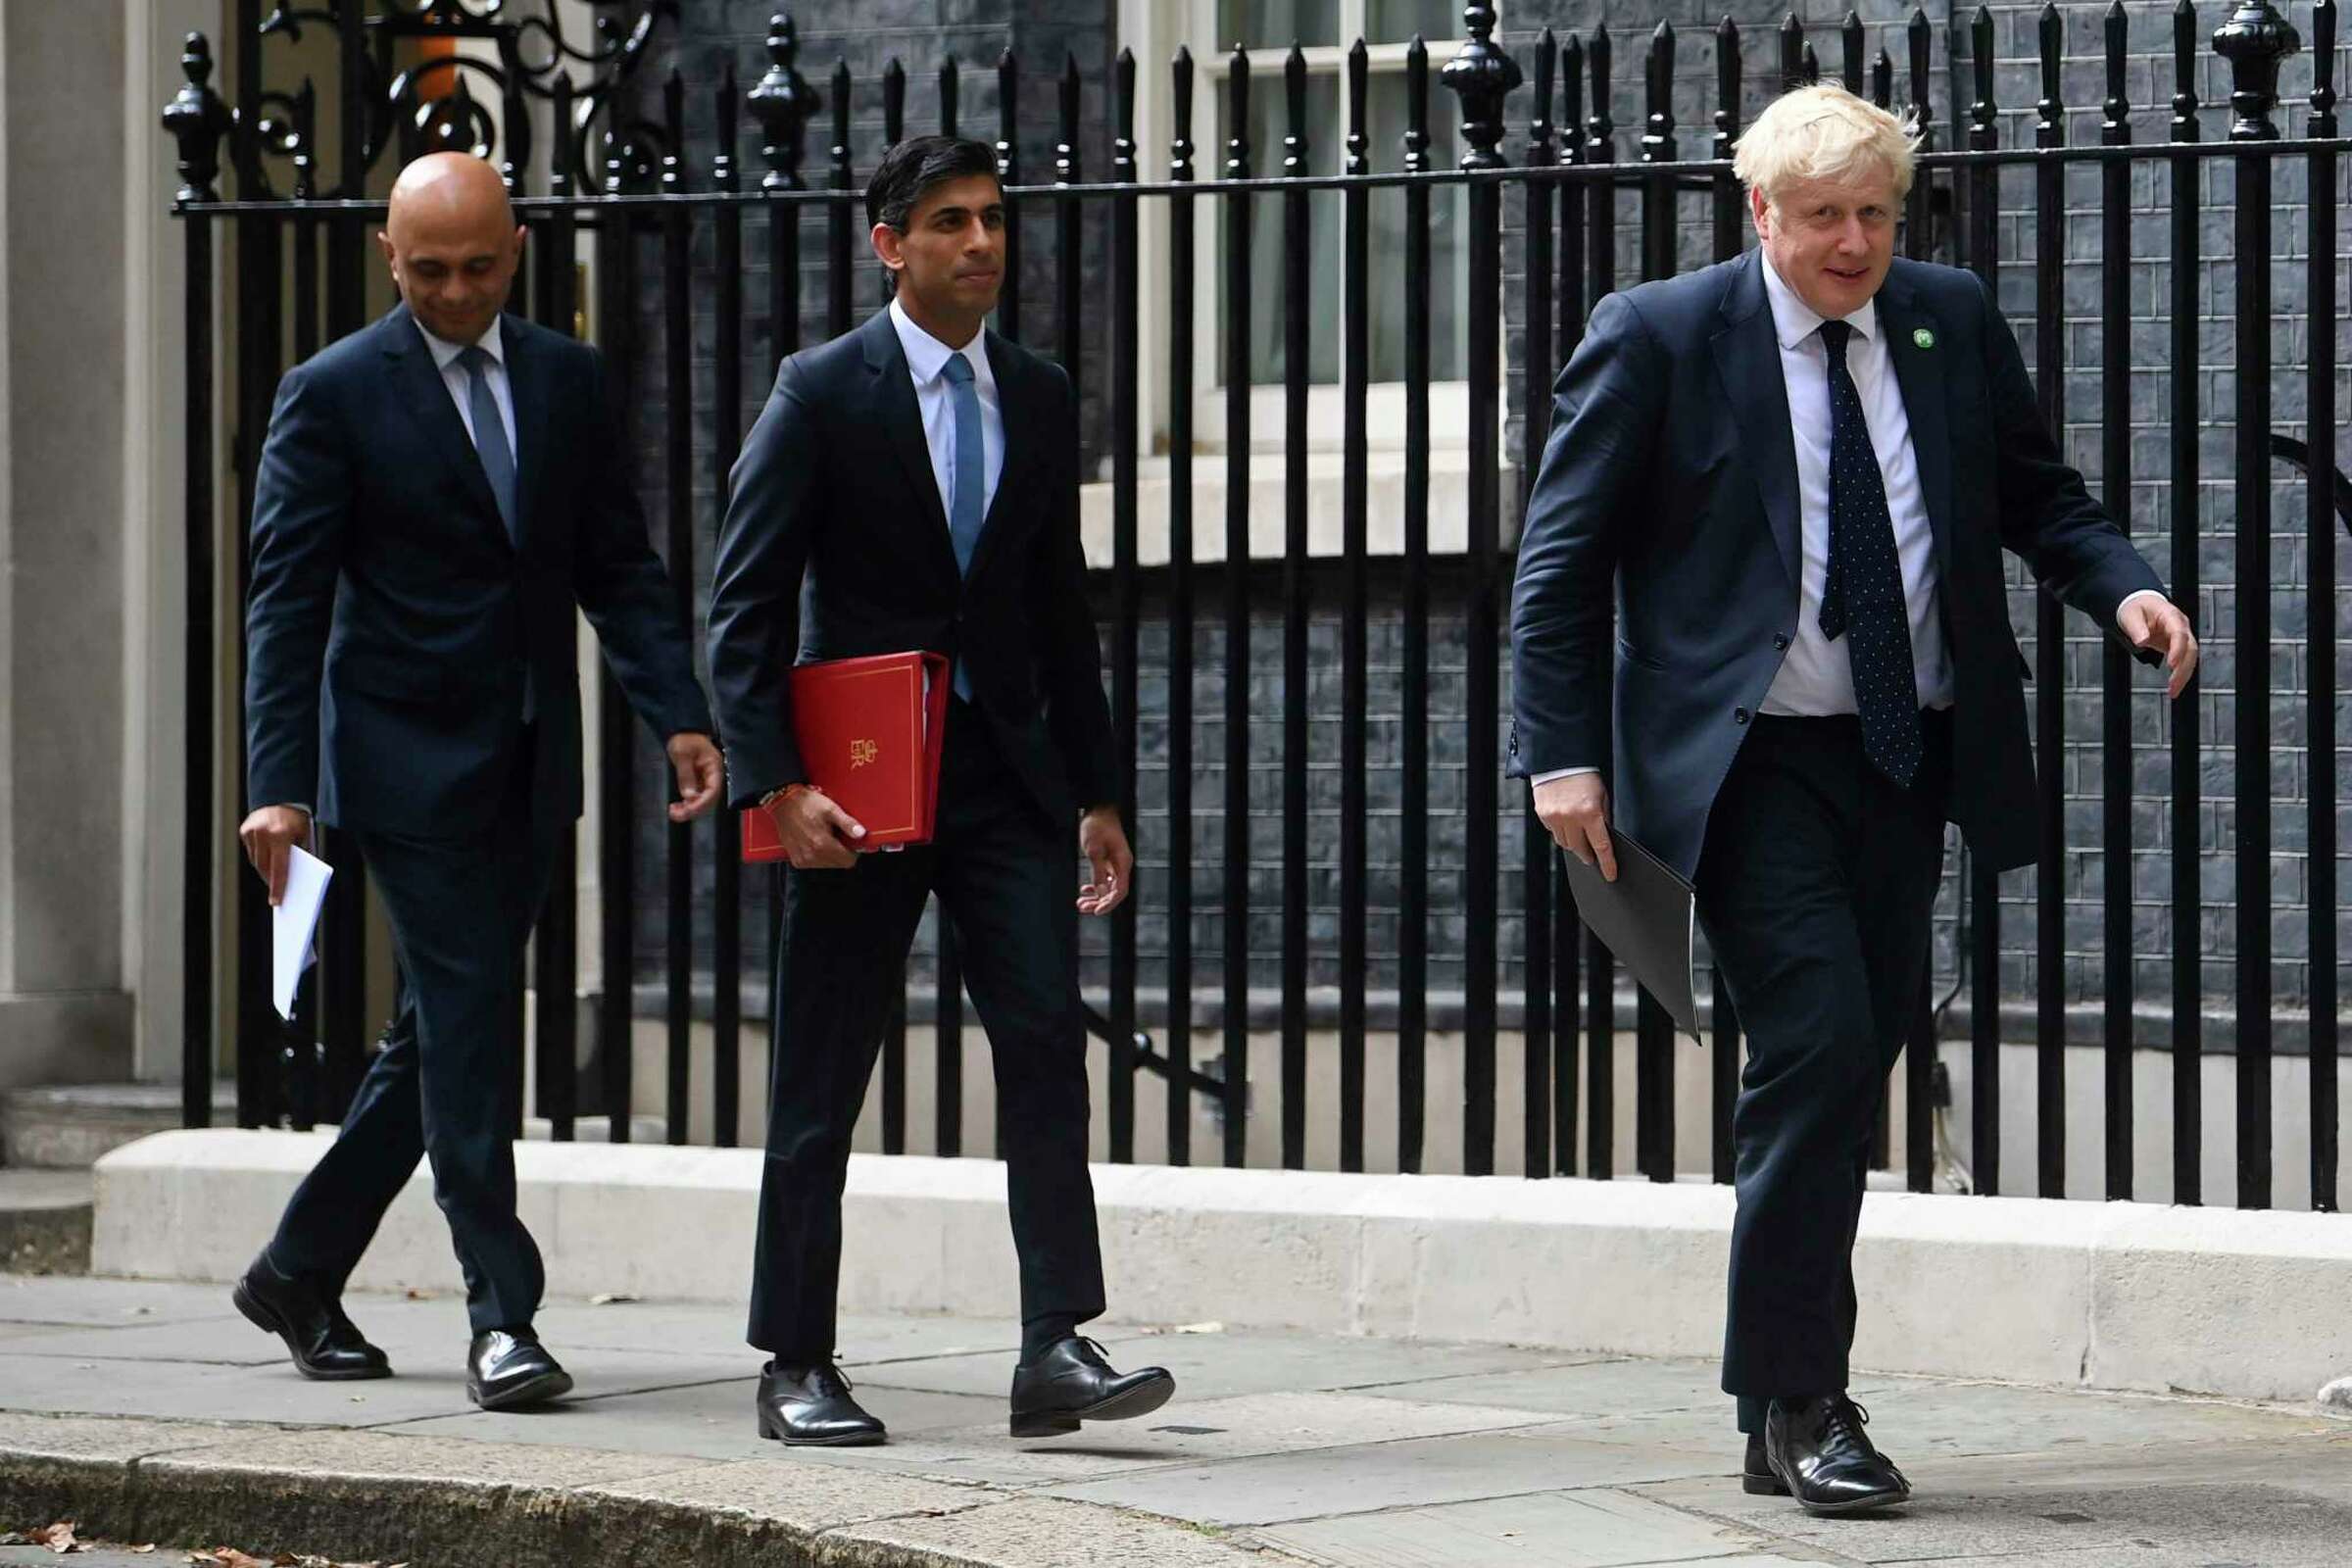 Rishi Sunak joins PM race to replace Boris Johnson in U.K.